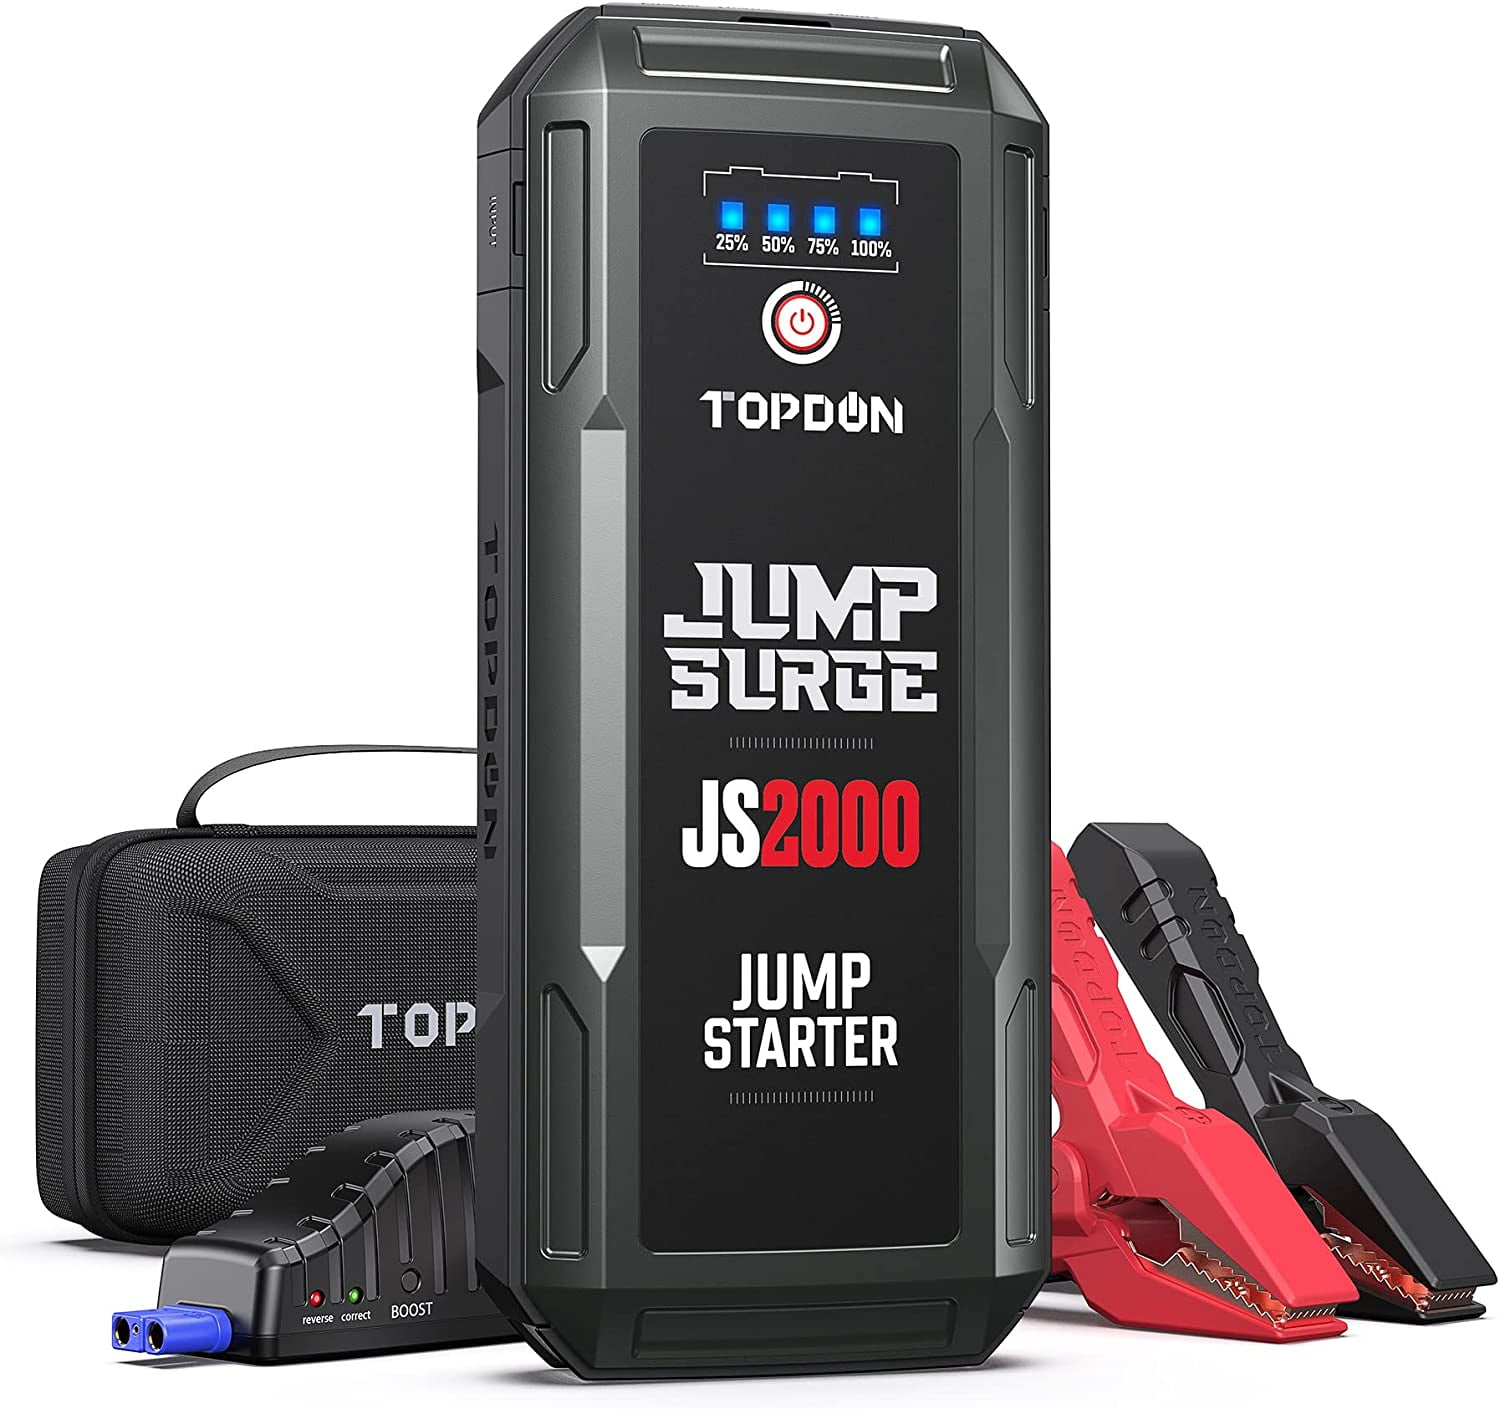 TopDon JS2000 Jump Starter Review & Demo 